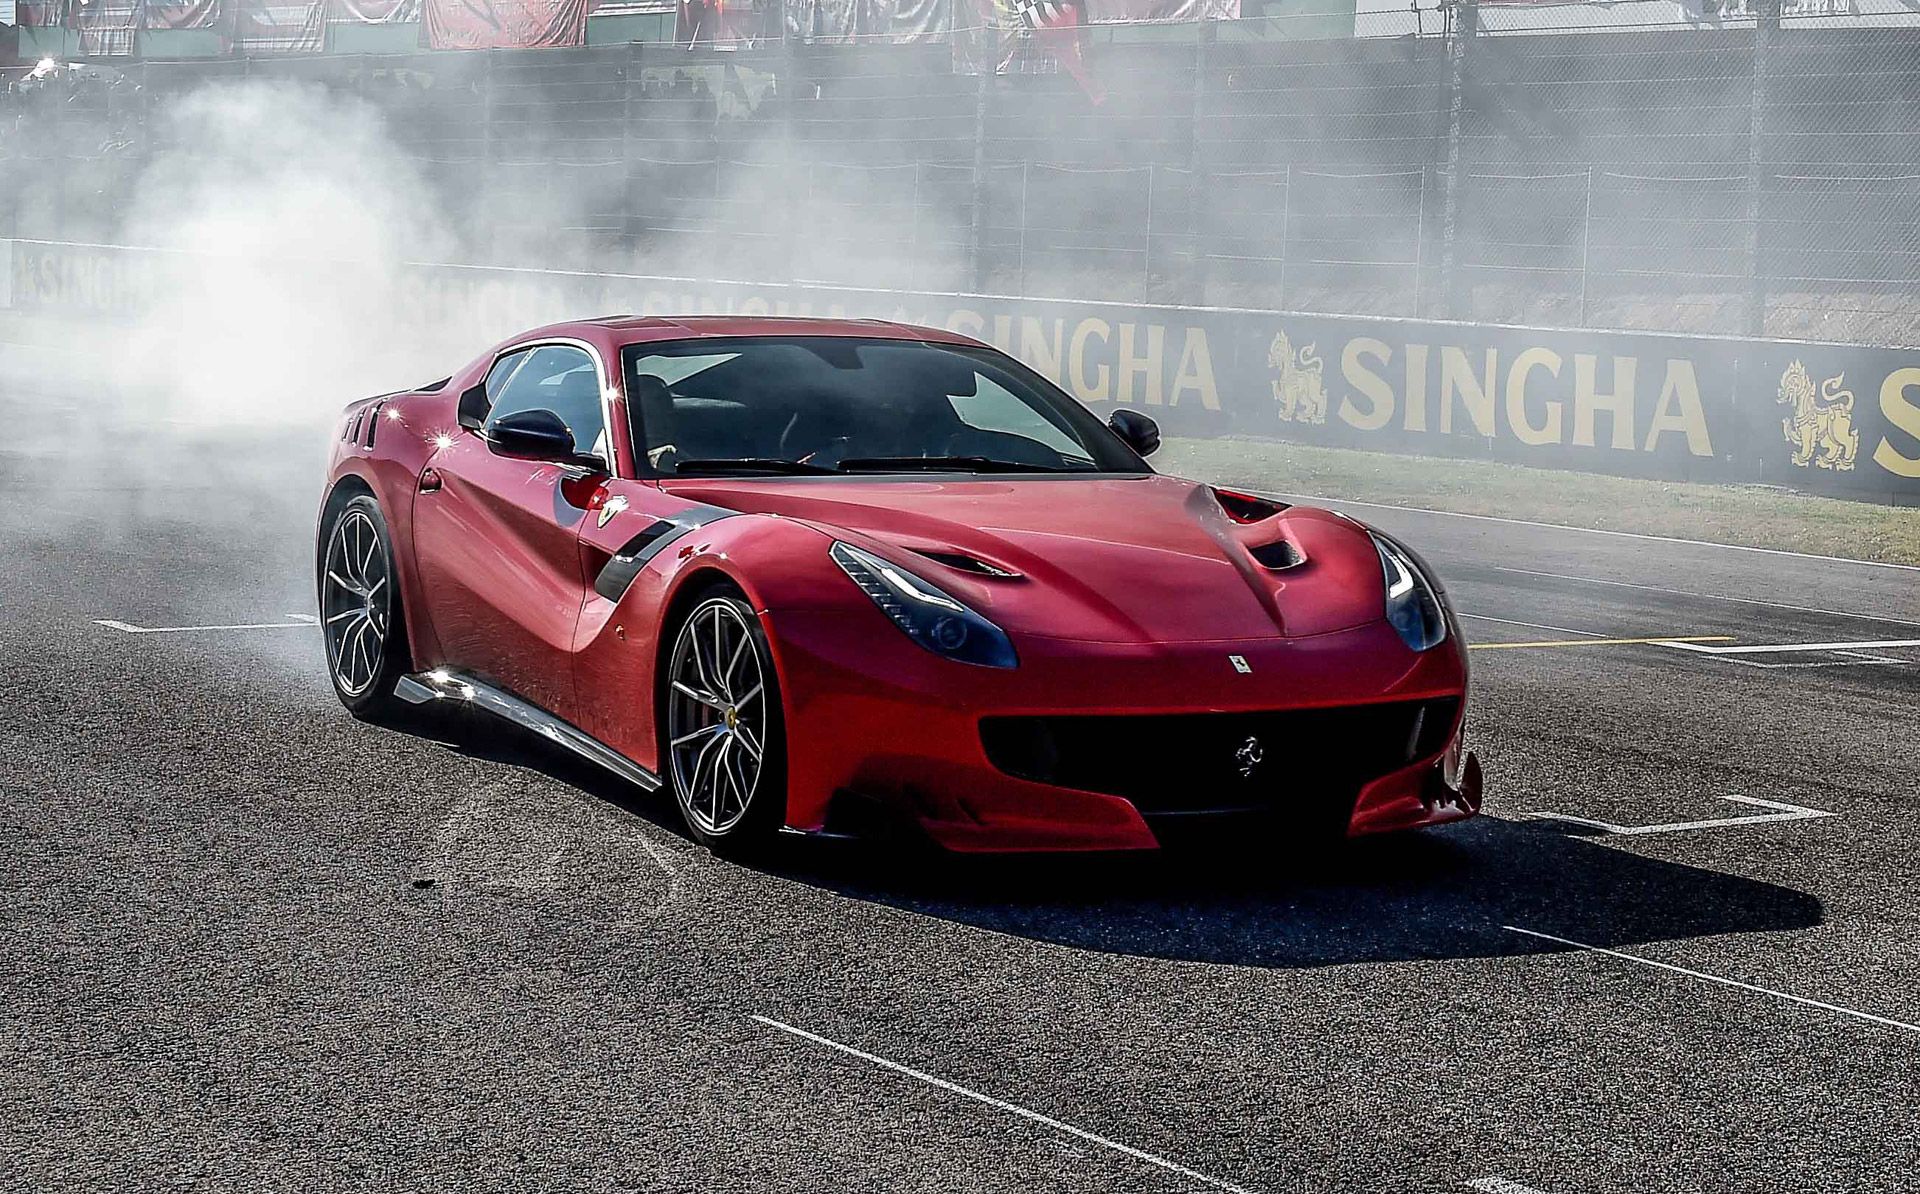 Ferrari F12 tdf Hits The Track: Video